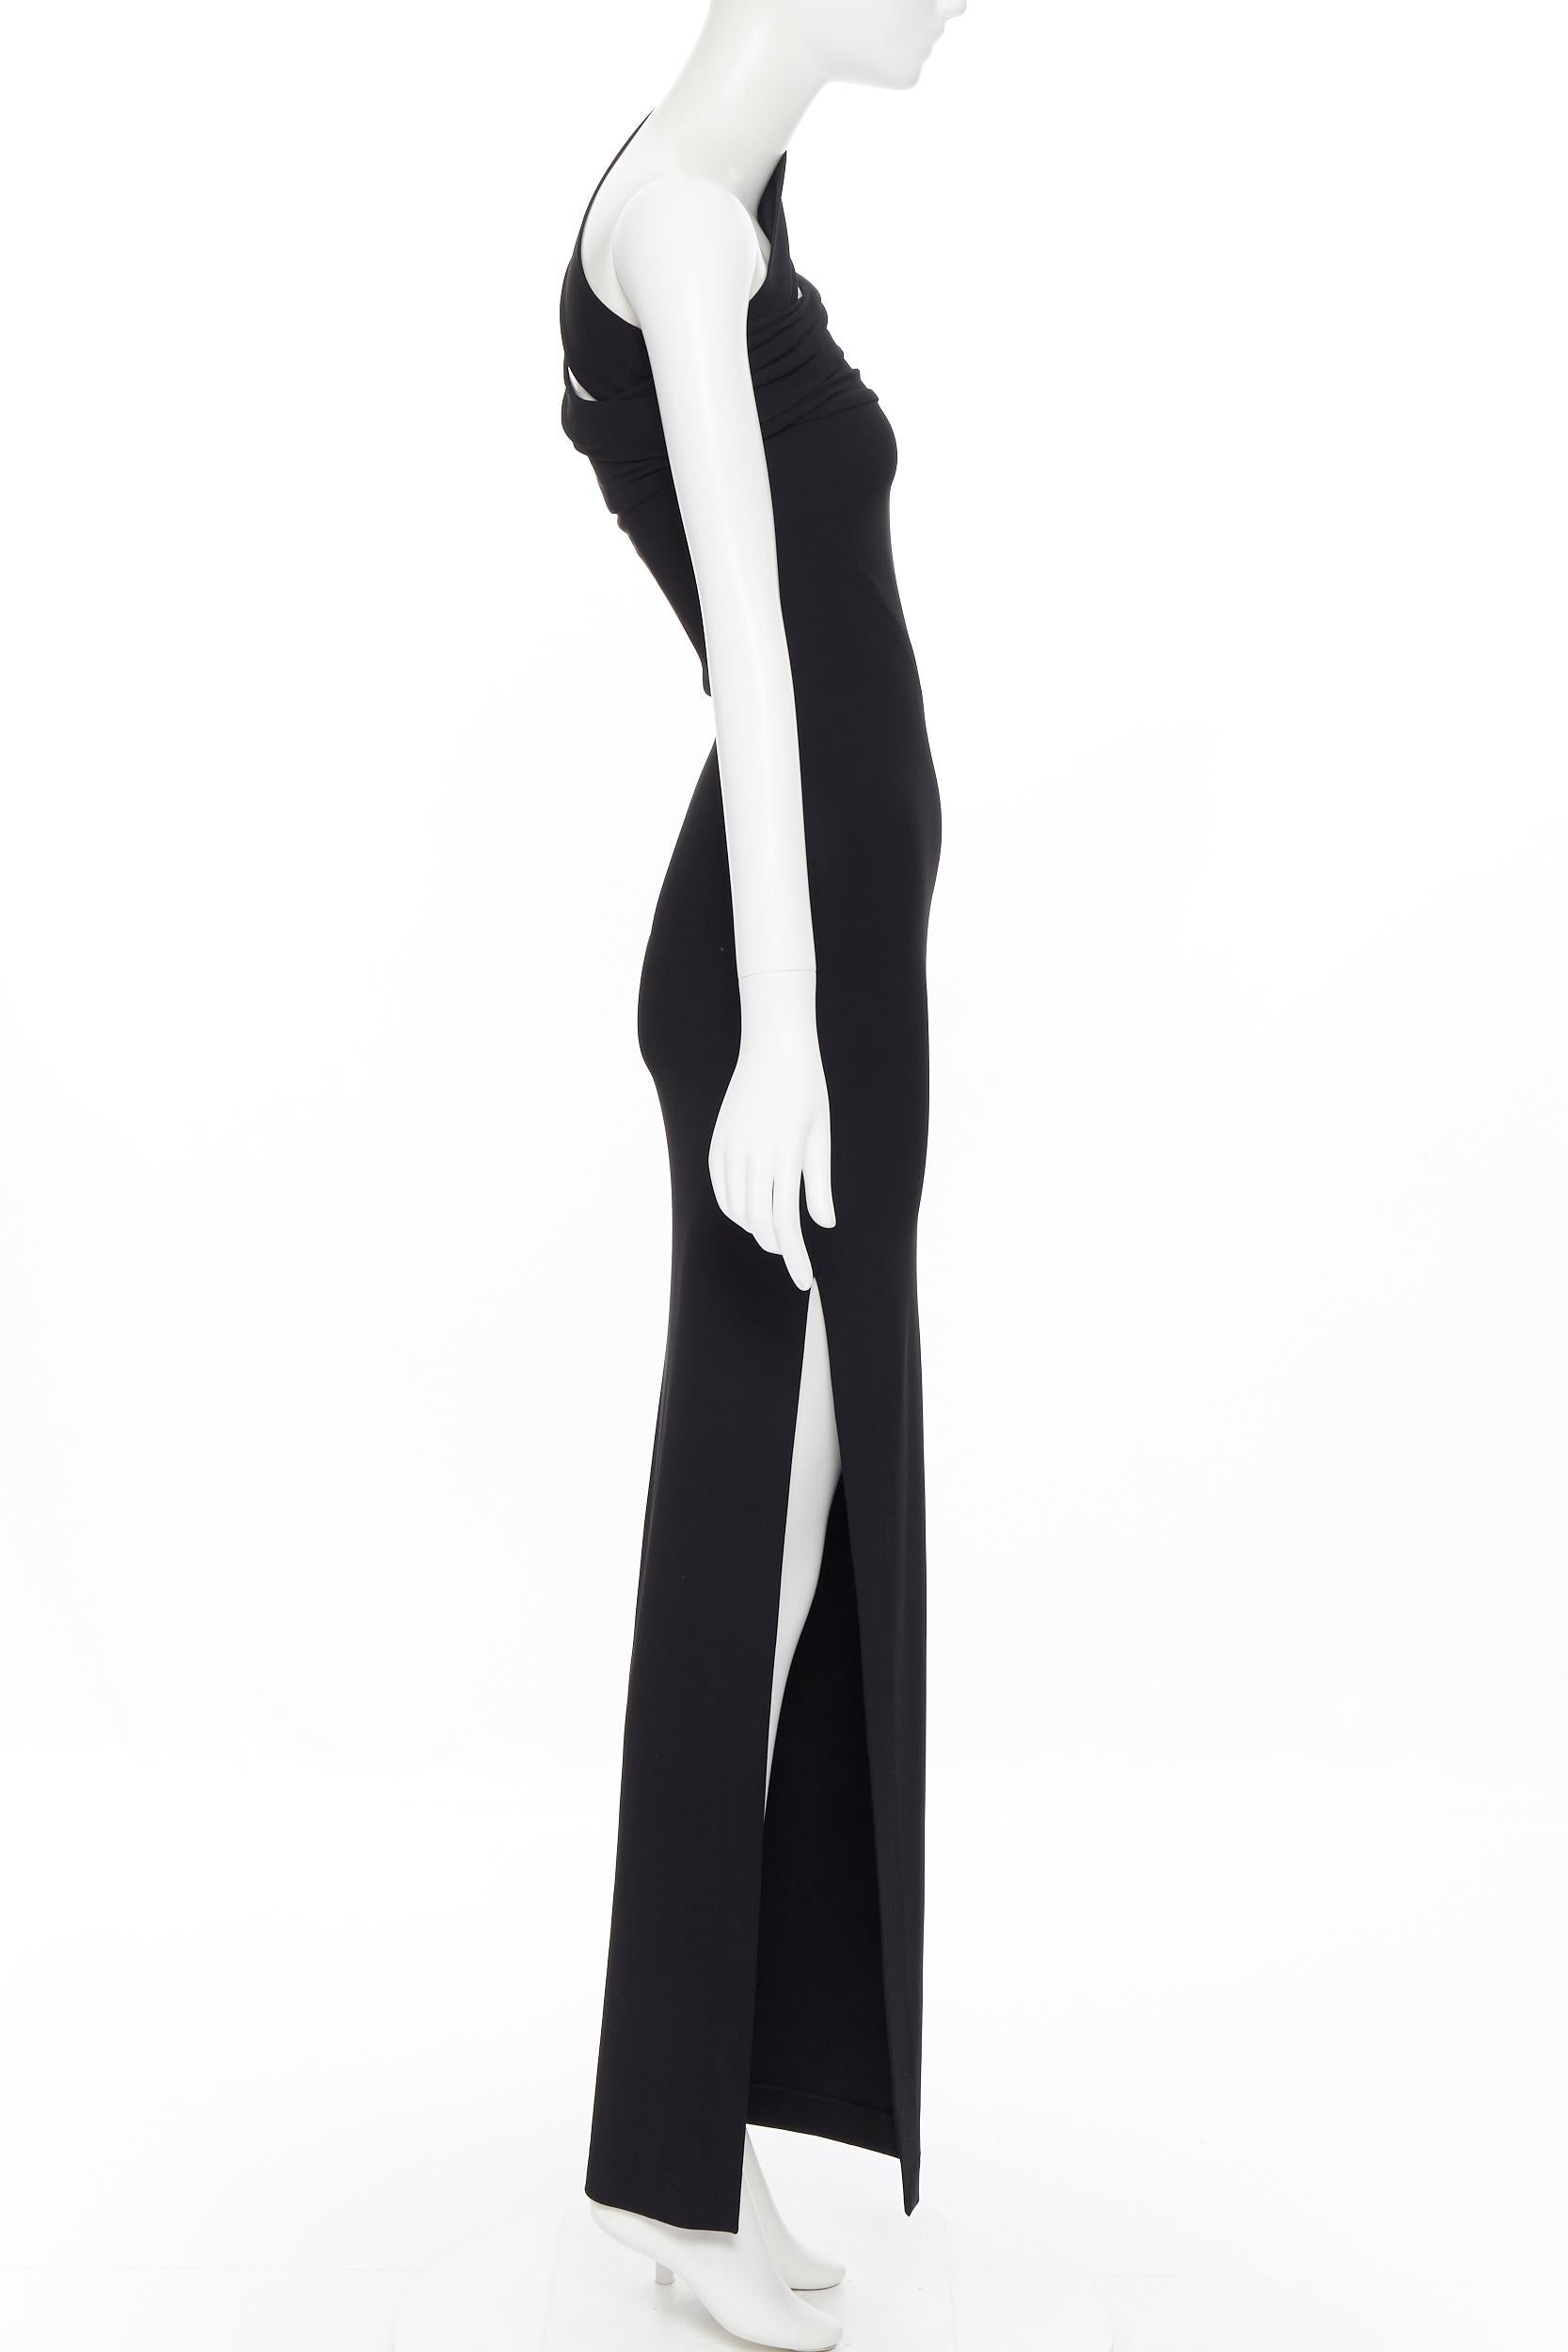 Black DONNA KARAN black rayon stretchy asymmetric off shoulder bodycon gown dress XS